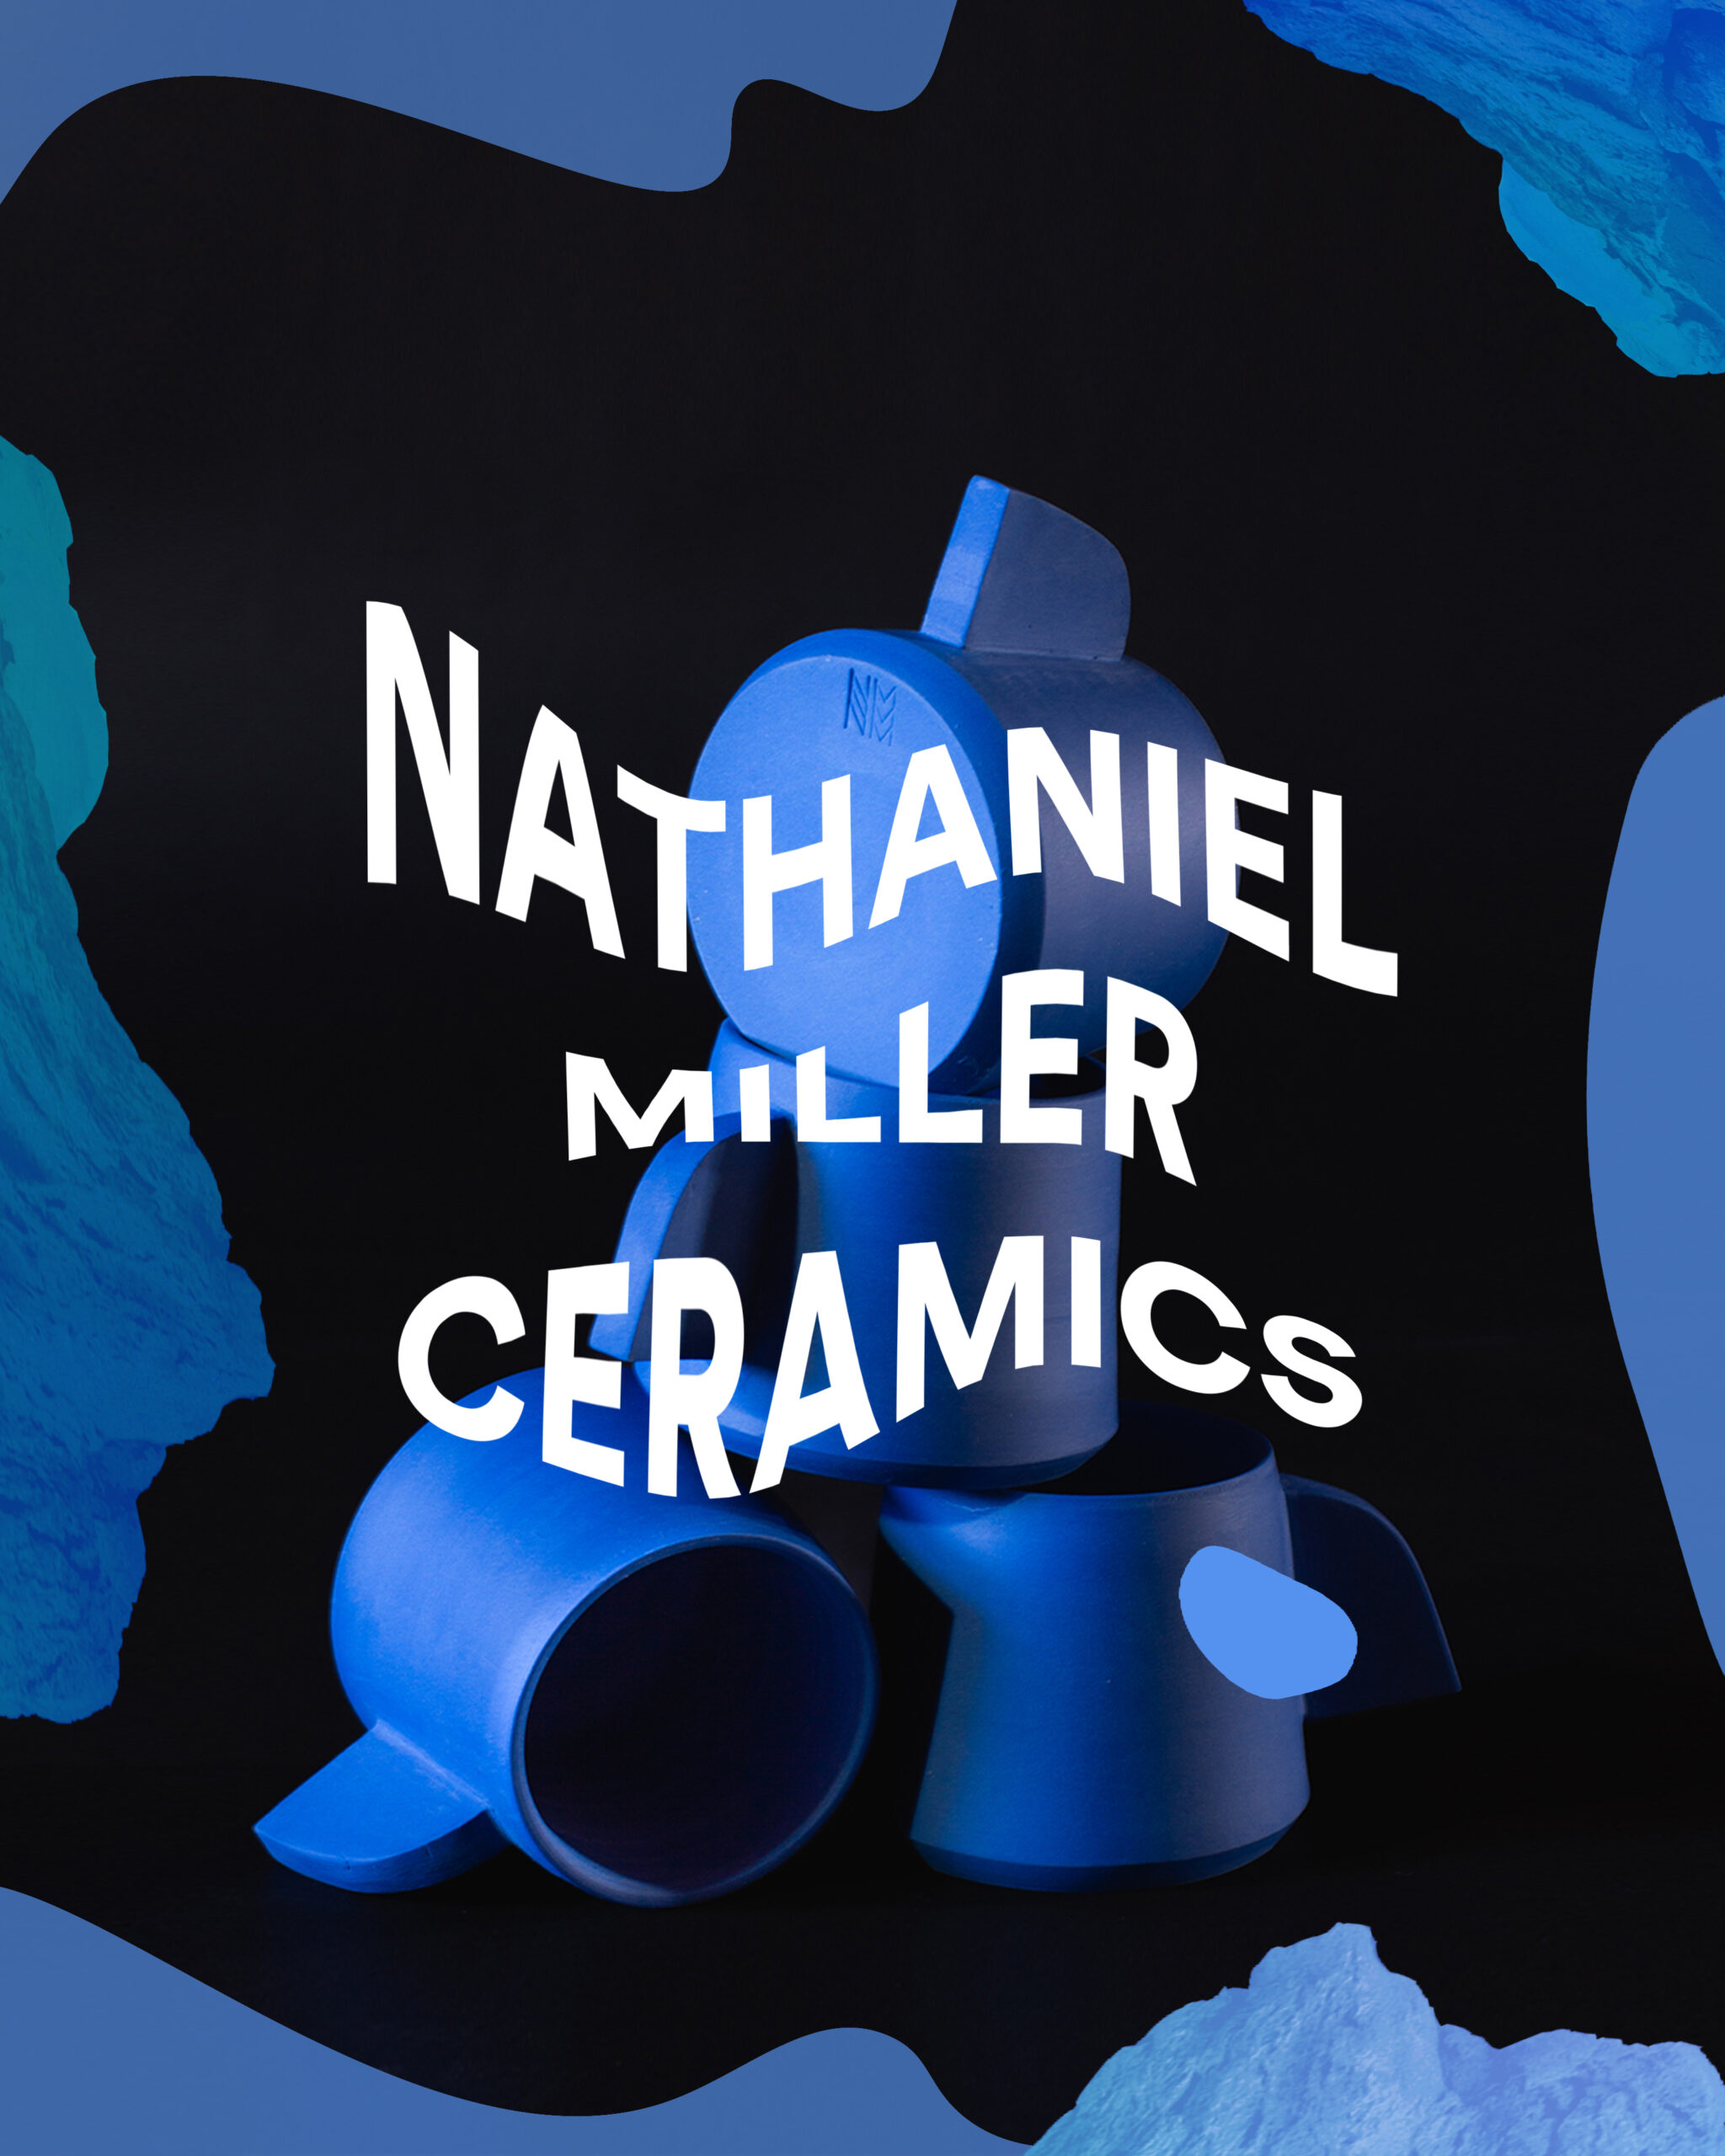 NathanielMillerCeramics_web